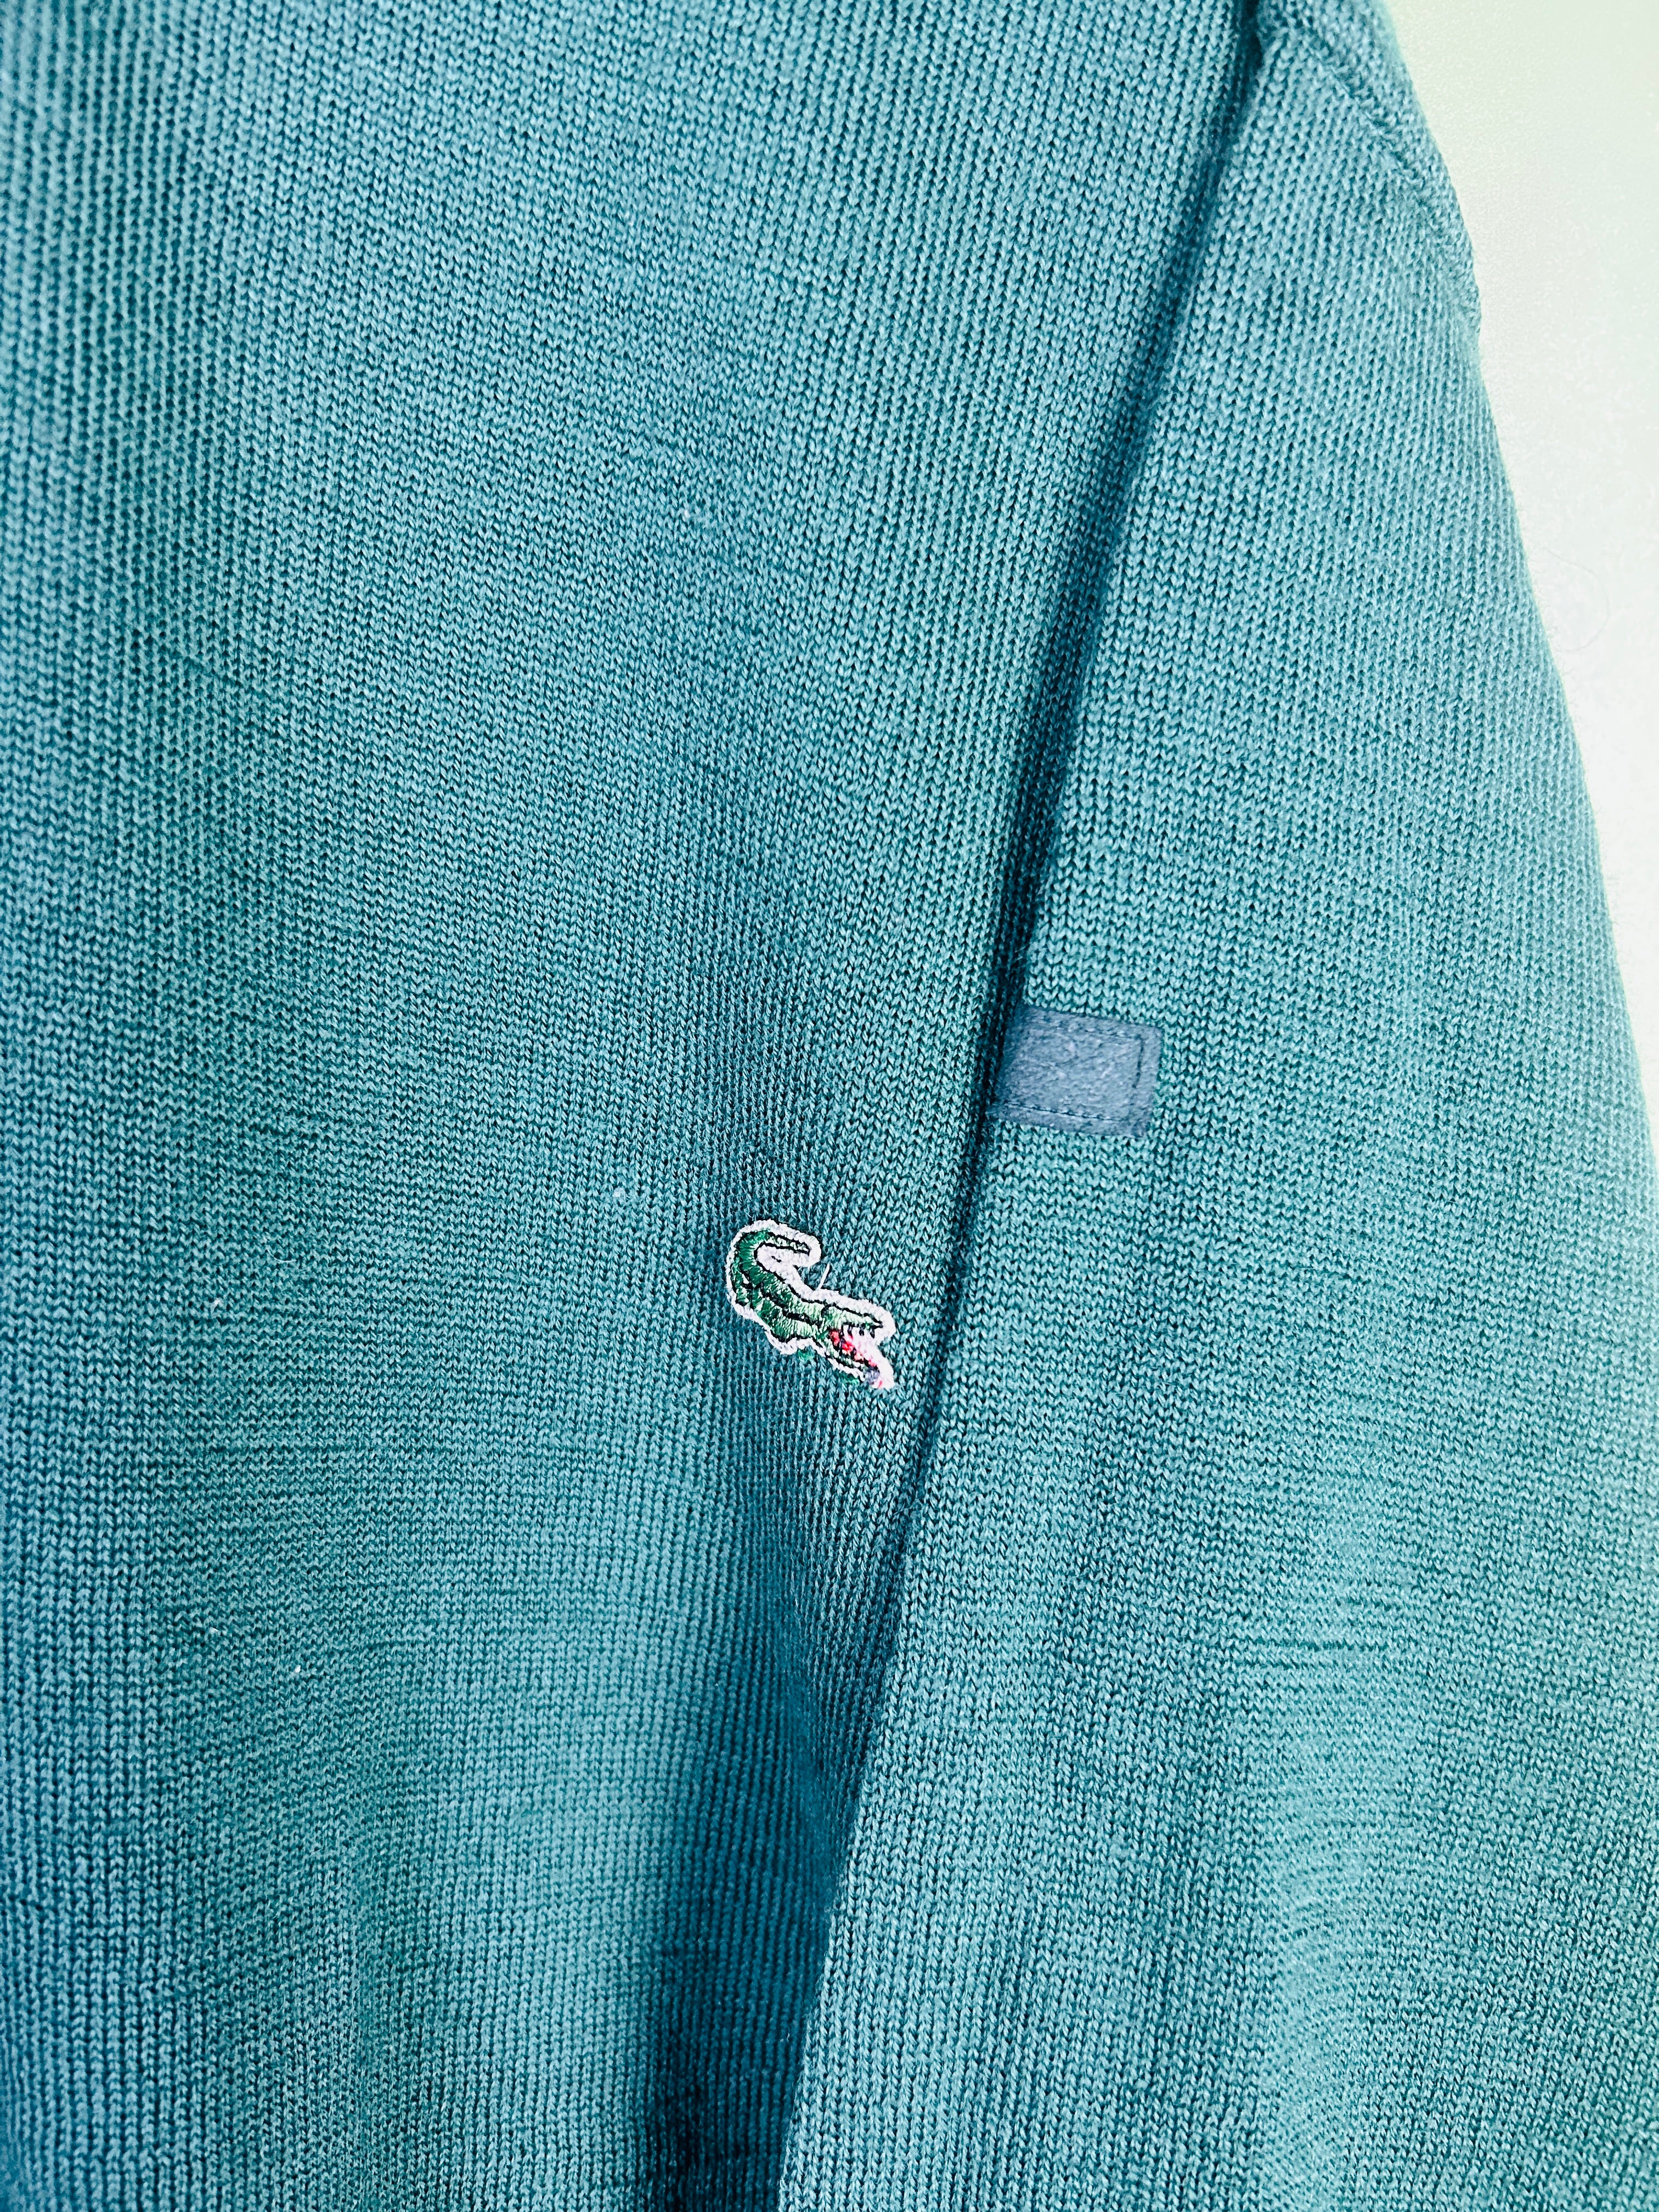 S Lacoste Vintage Pullover dunkelgrün